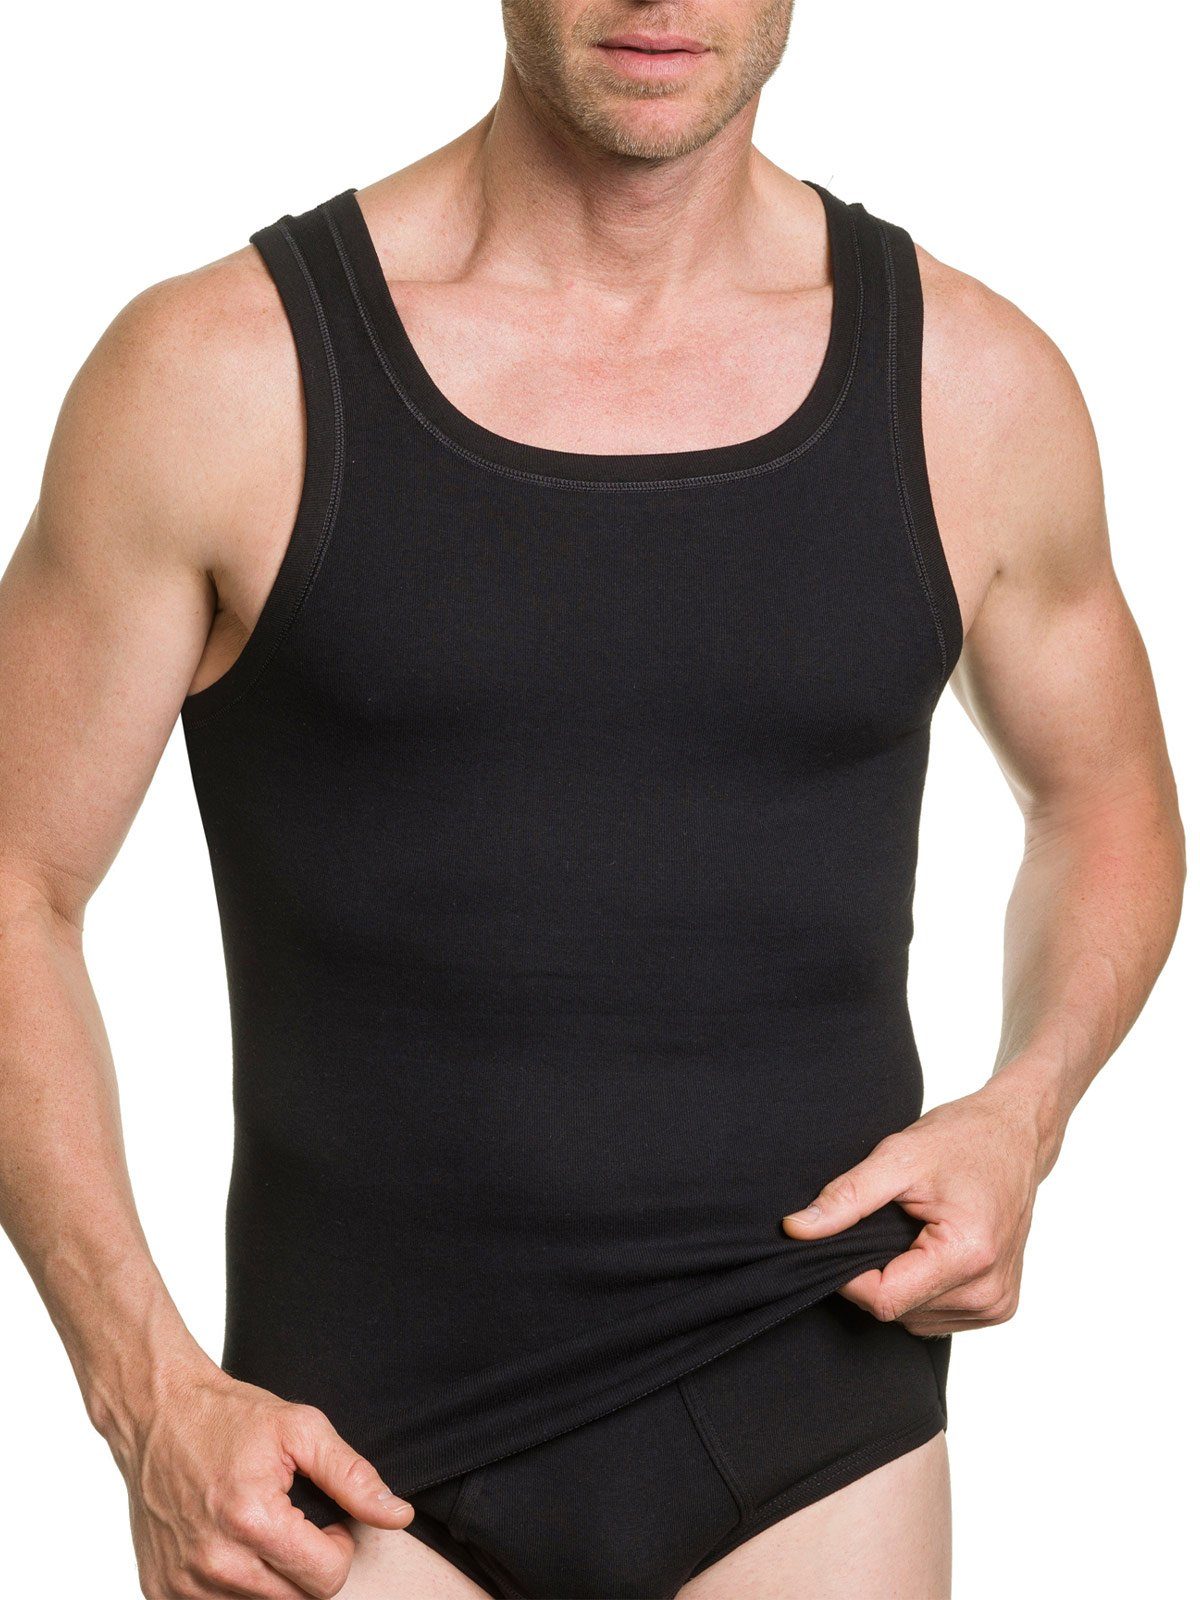 KUMPF Achselhemd Herren Unterhemd Feinripp (Stück, 1-St) hohe Markenqualität schwarz